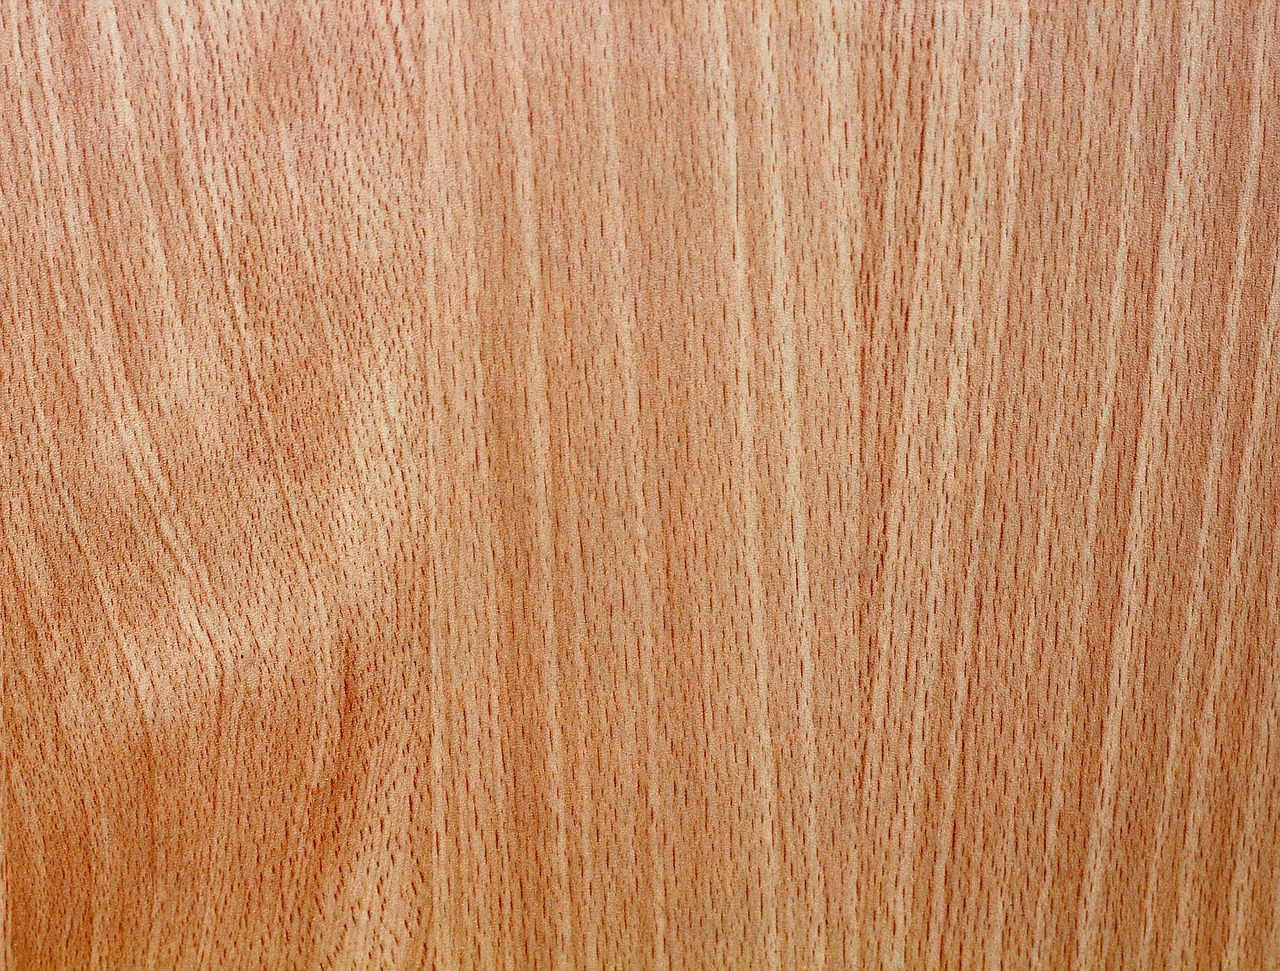 wood timber grain free photo